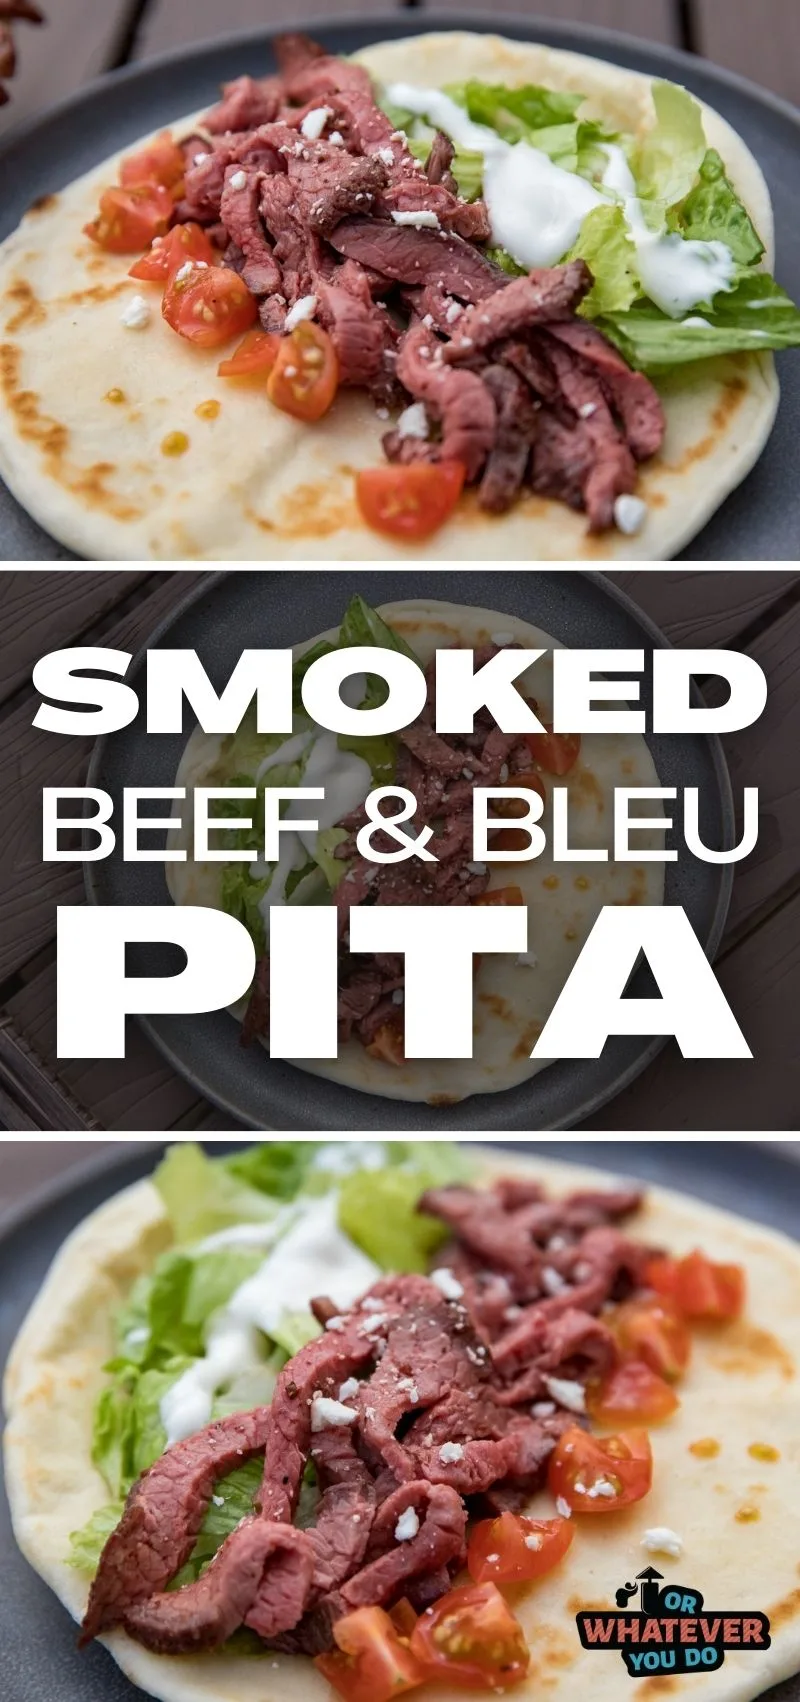 Smoked Beef and Bleu Pita